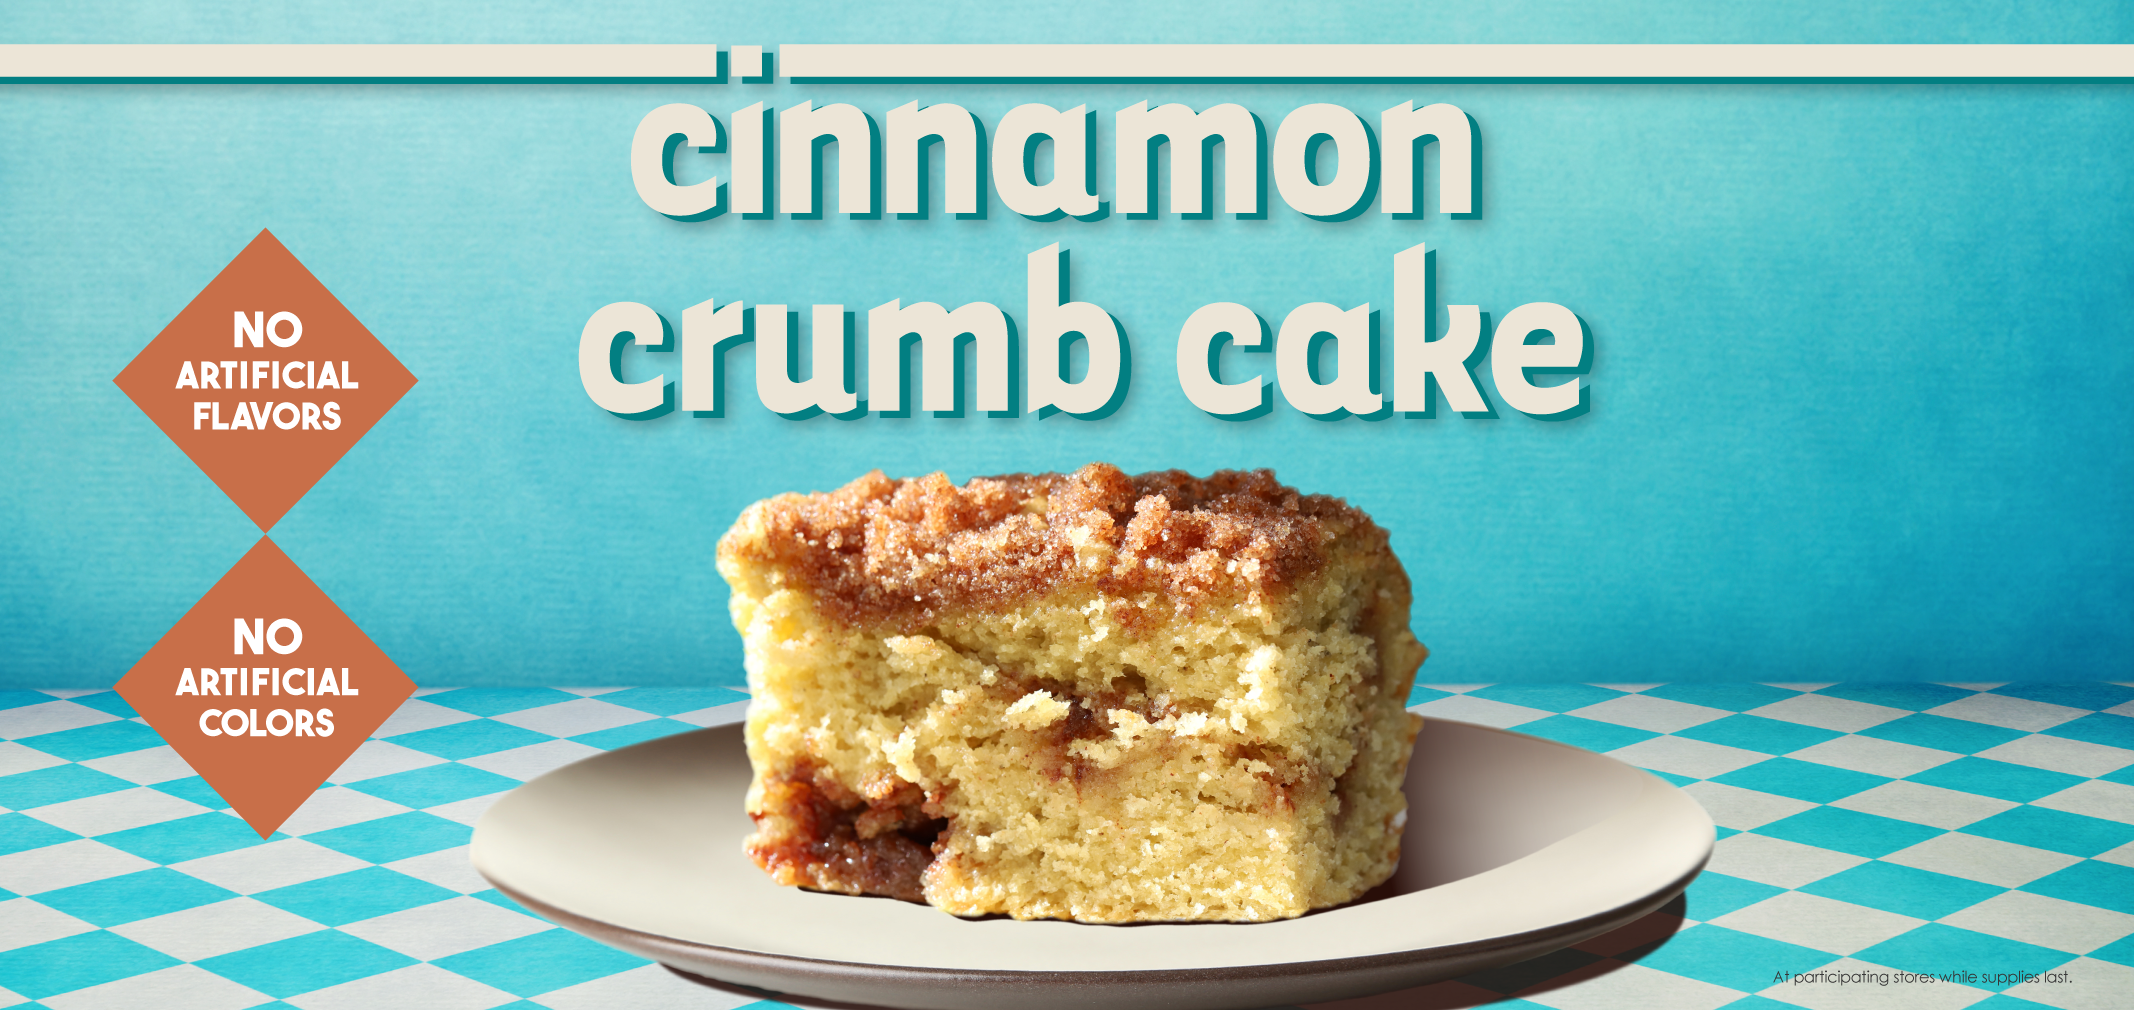 Cinnamon Crumb Cake label image